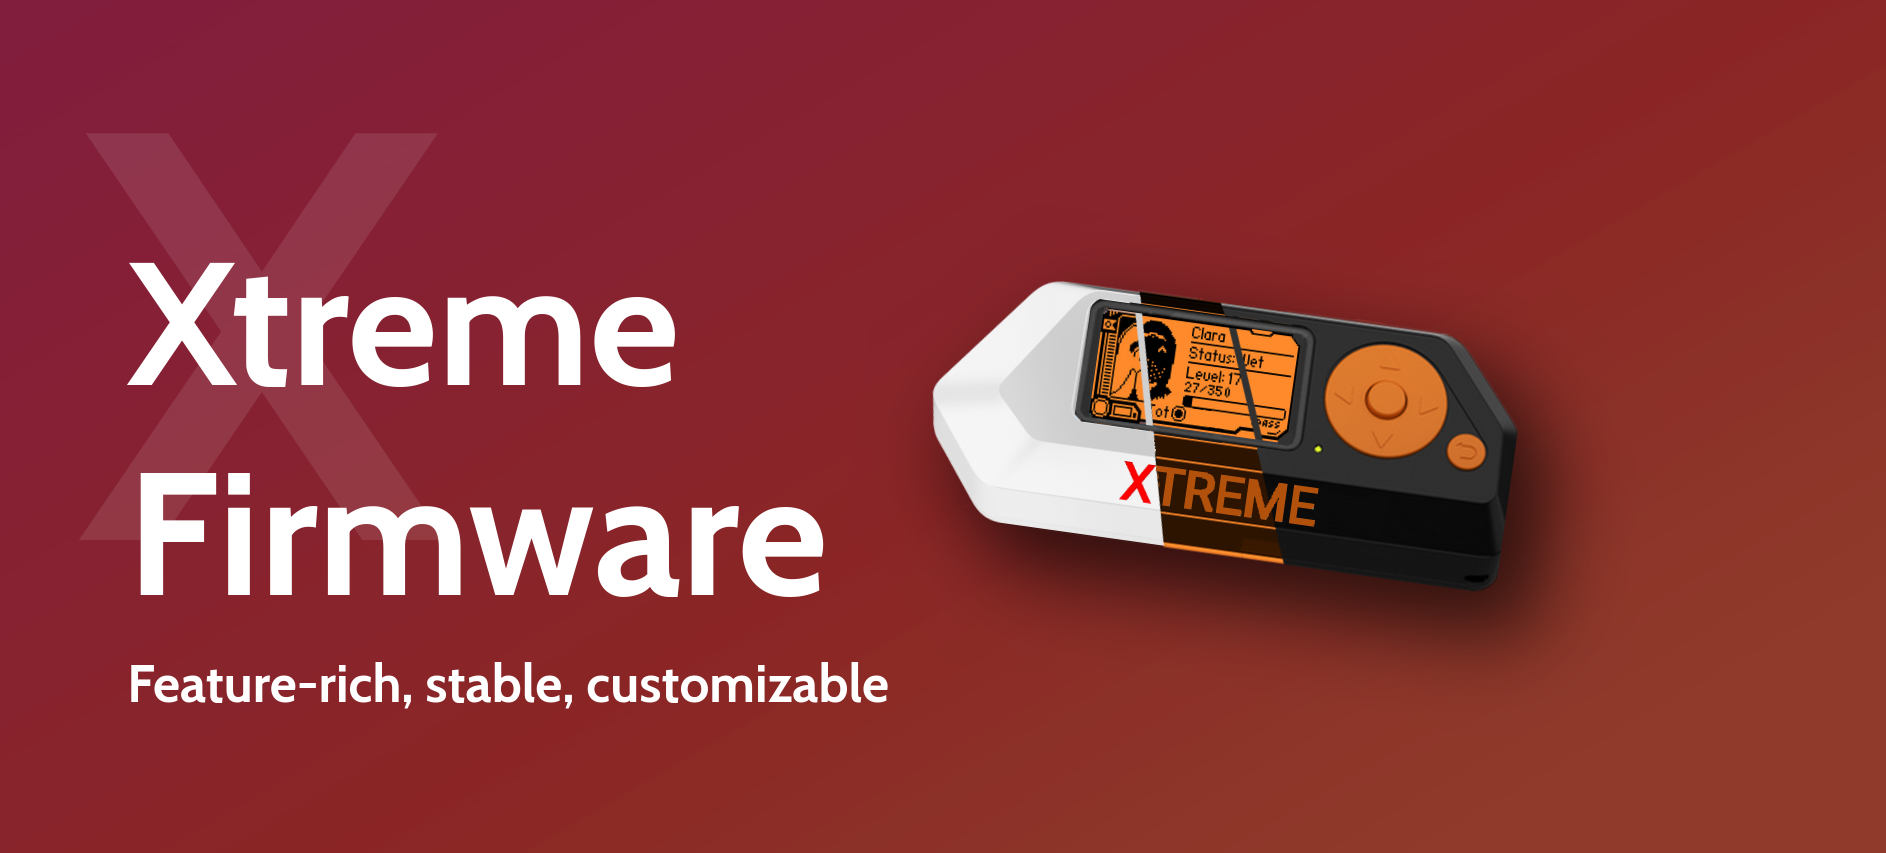 Xtreme-Firmware